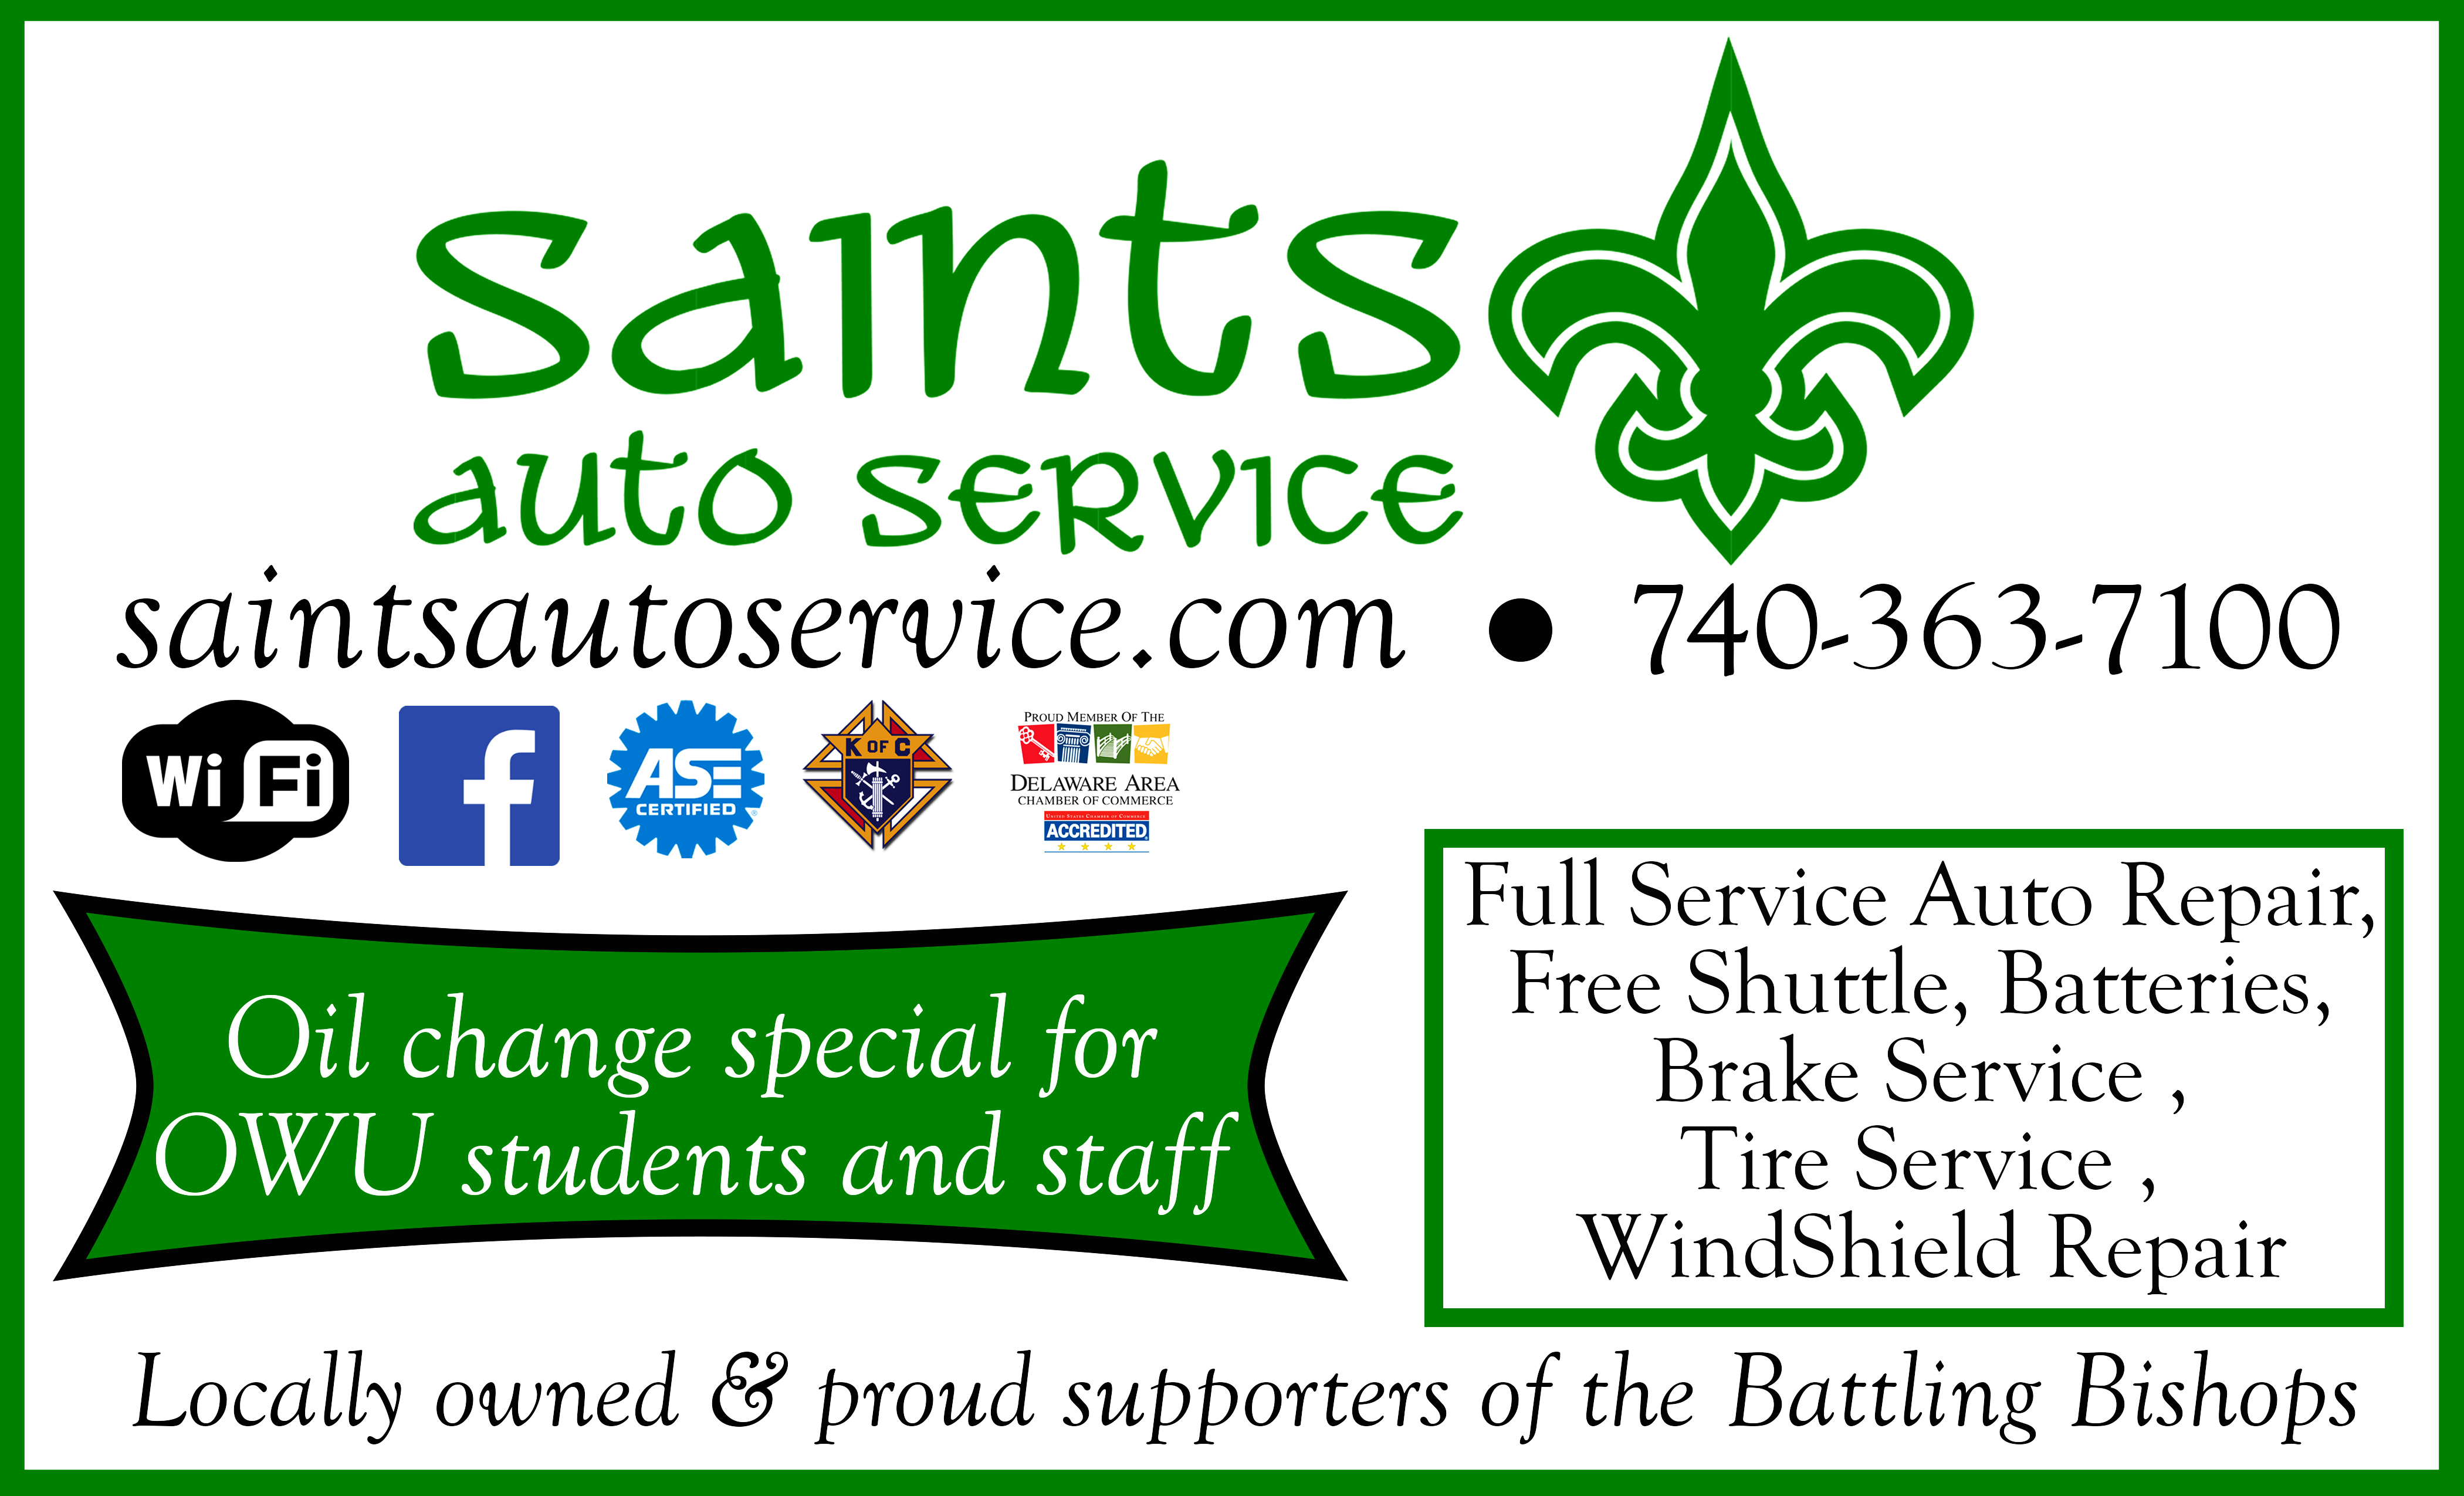 Saint’s Auto Service ad